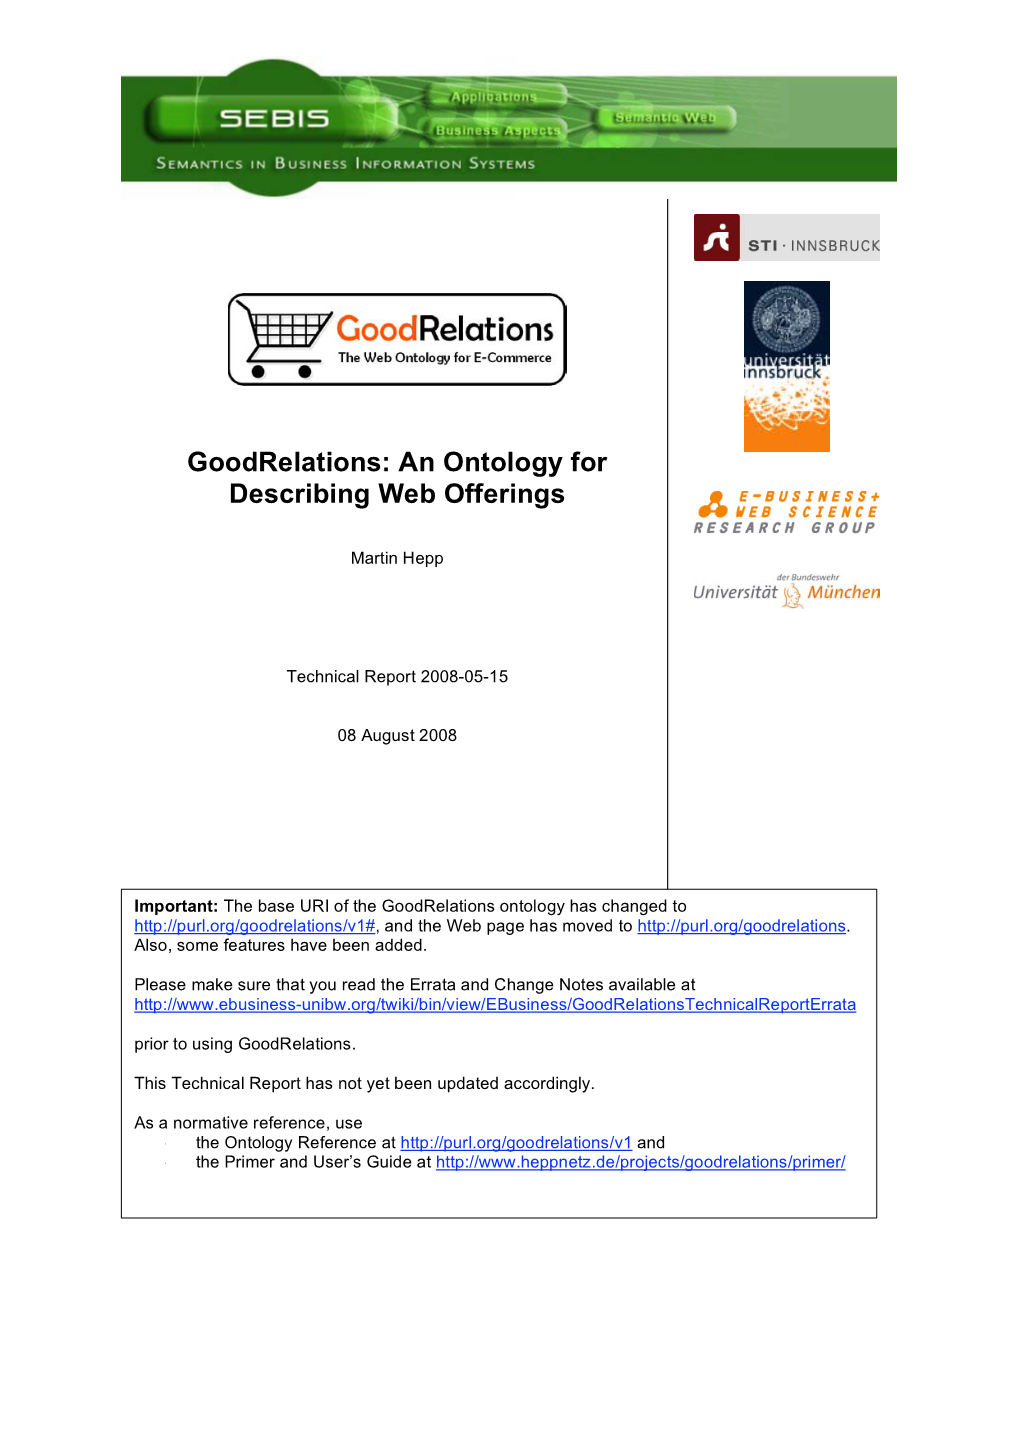 Goodrelations: an Ontology for Describing Web Offerings